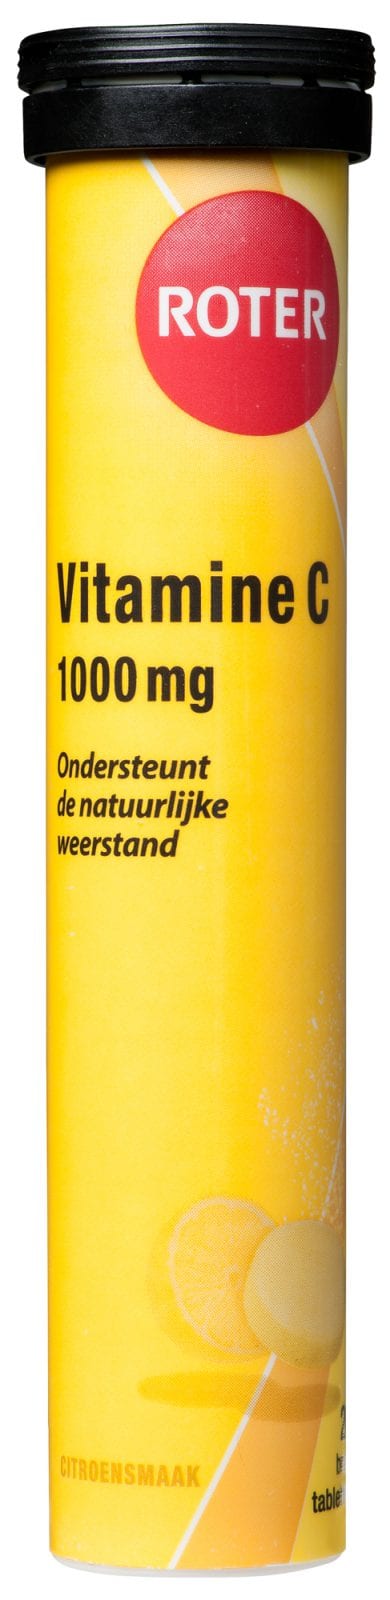 Vitamine extra C 1000 mg 20 bruistabletten Roter